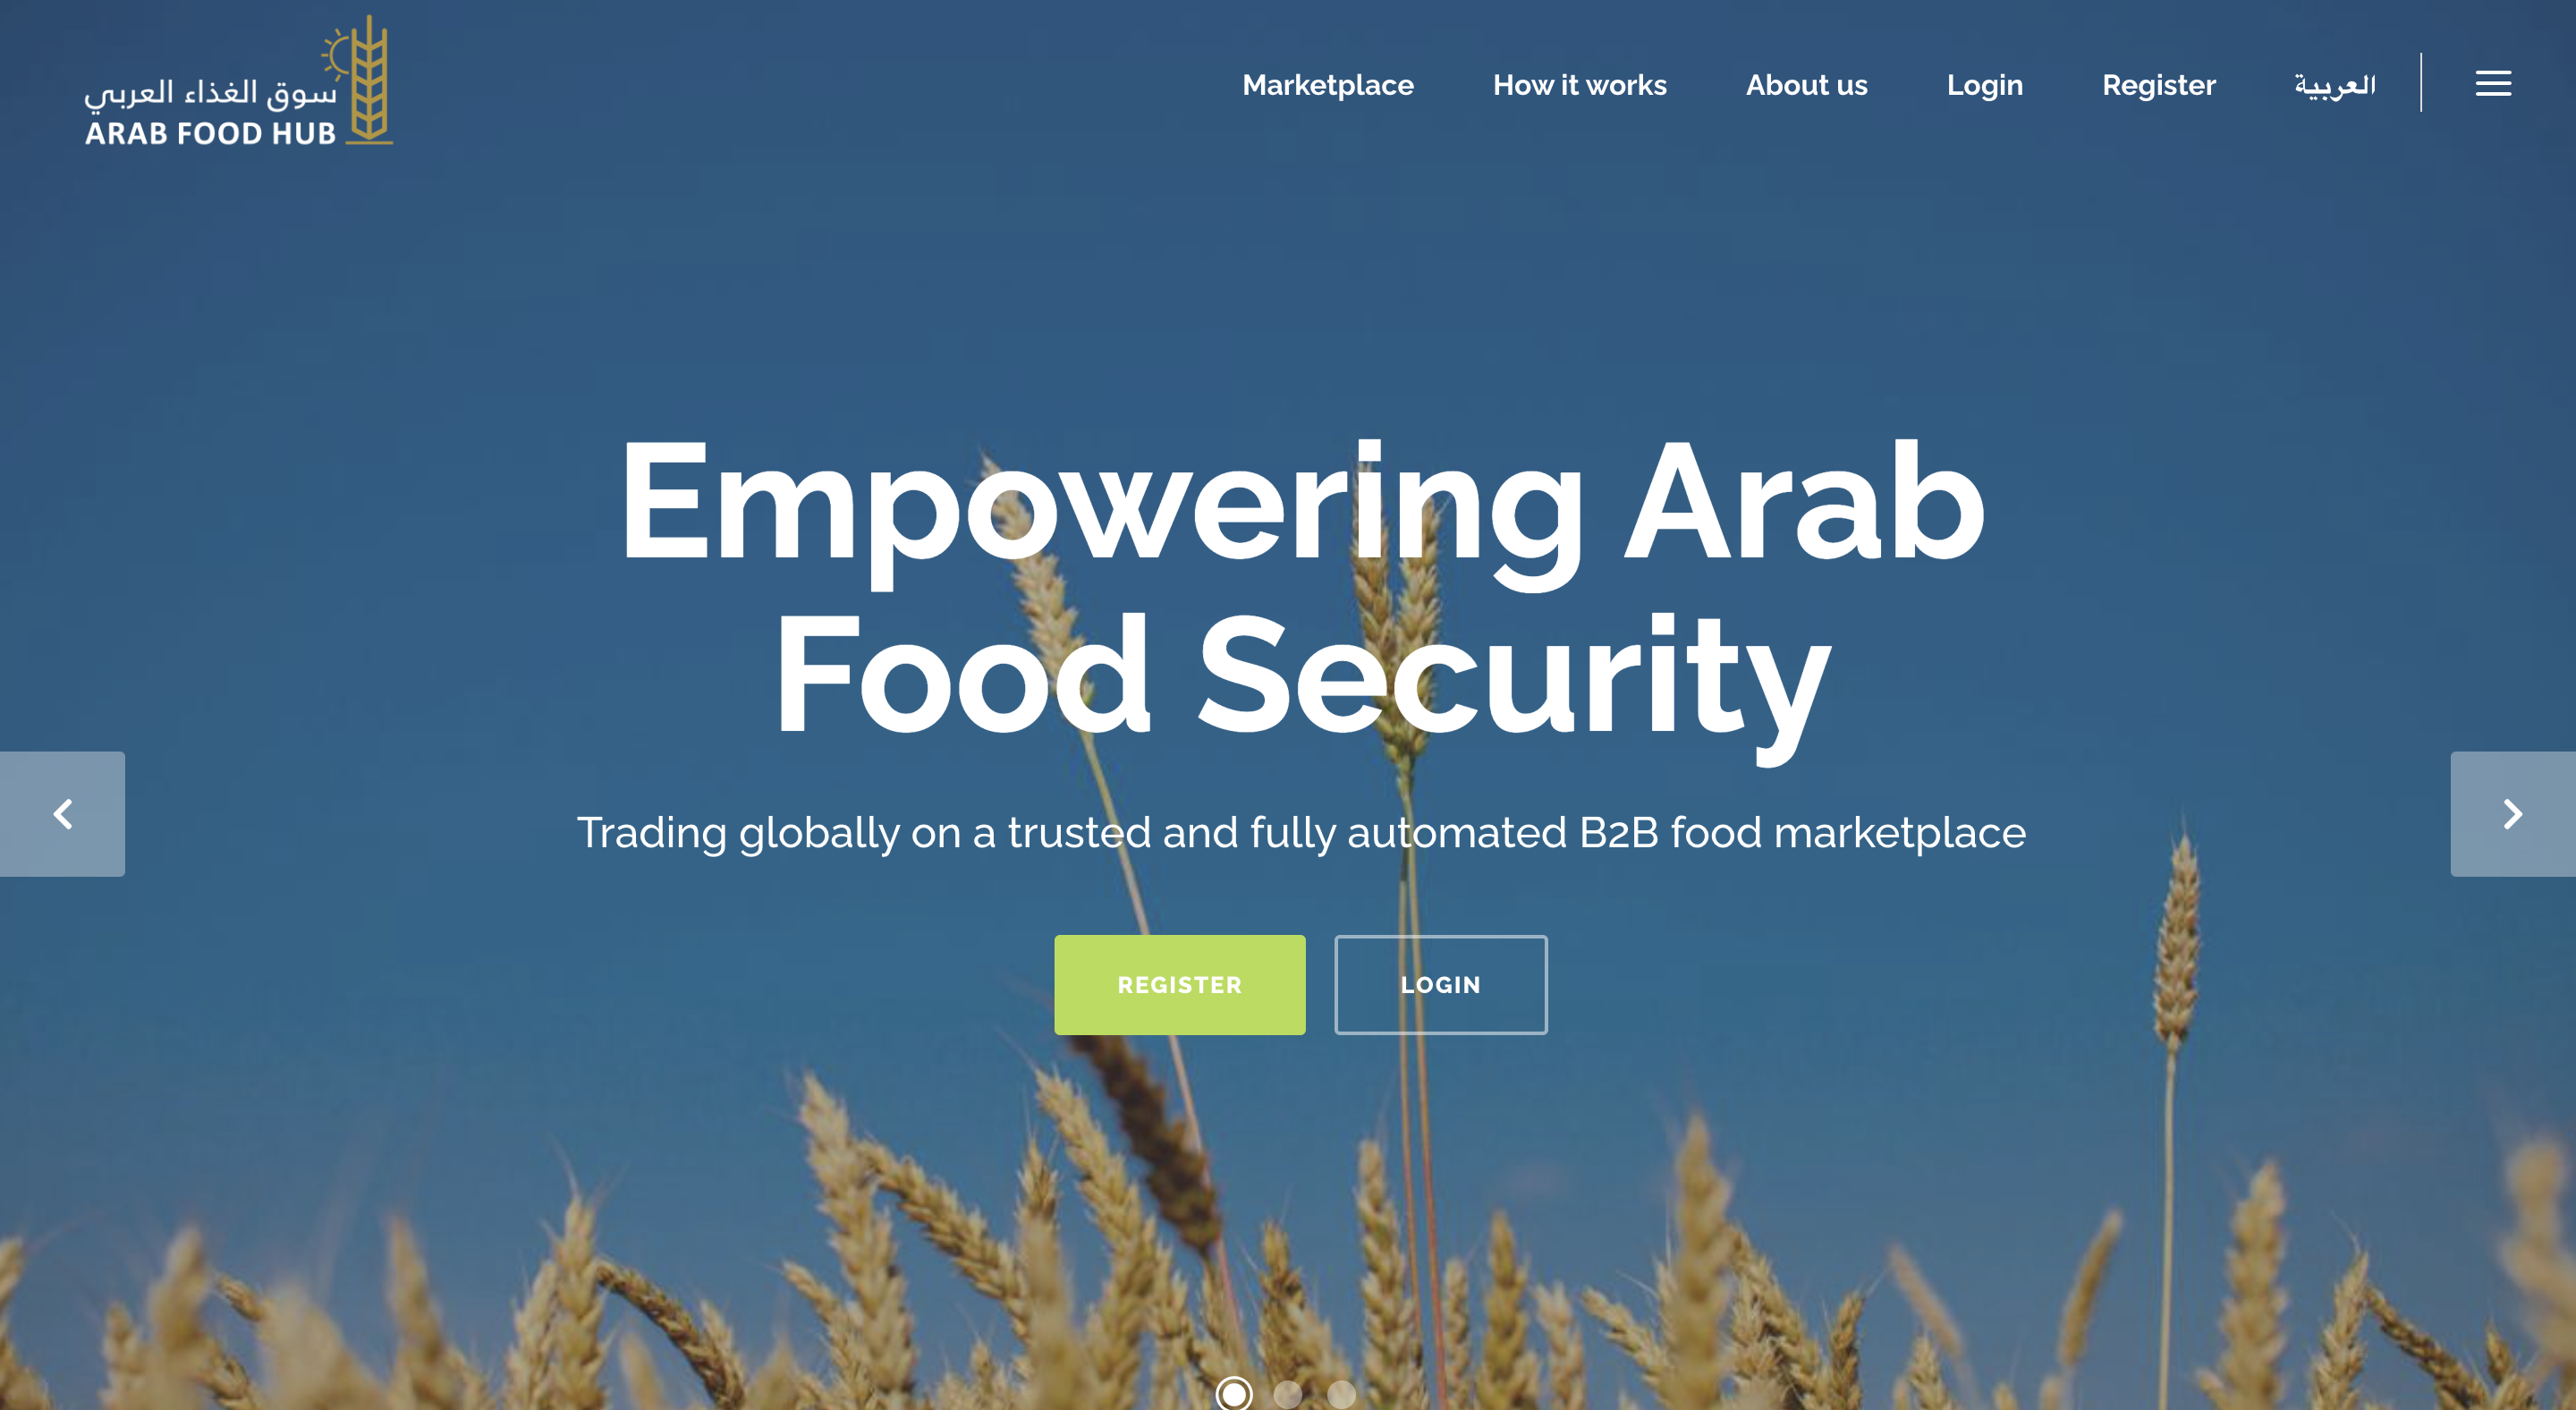 arab food hub website screenshot